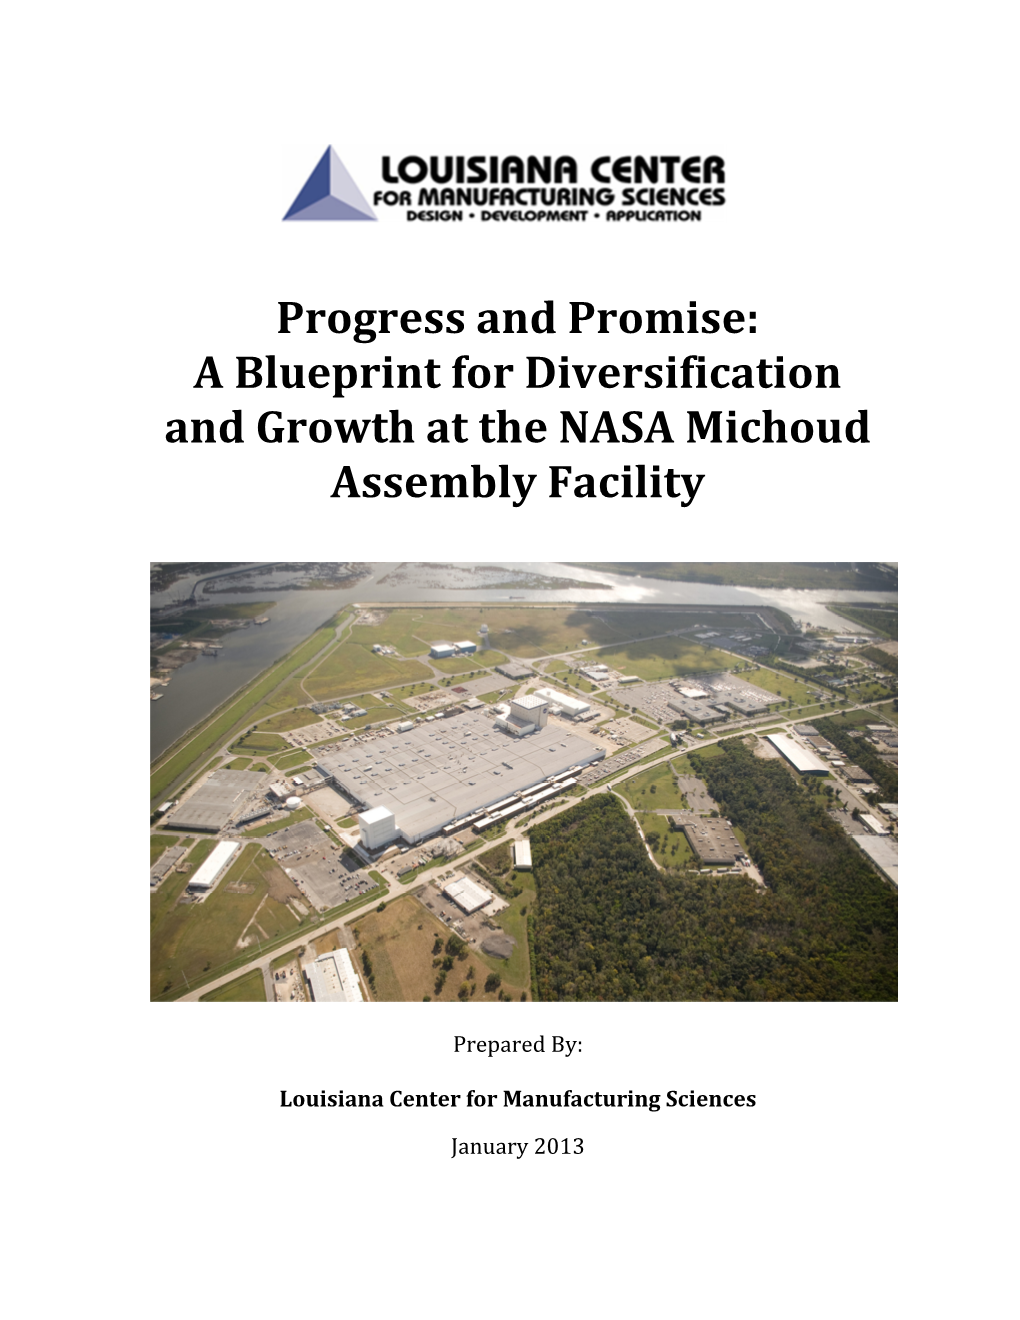 A Blueprint for Diversification and Growth at the NASA Michoud Assembly Facility